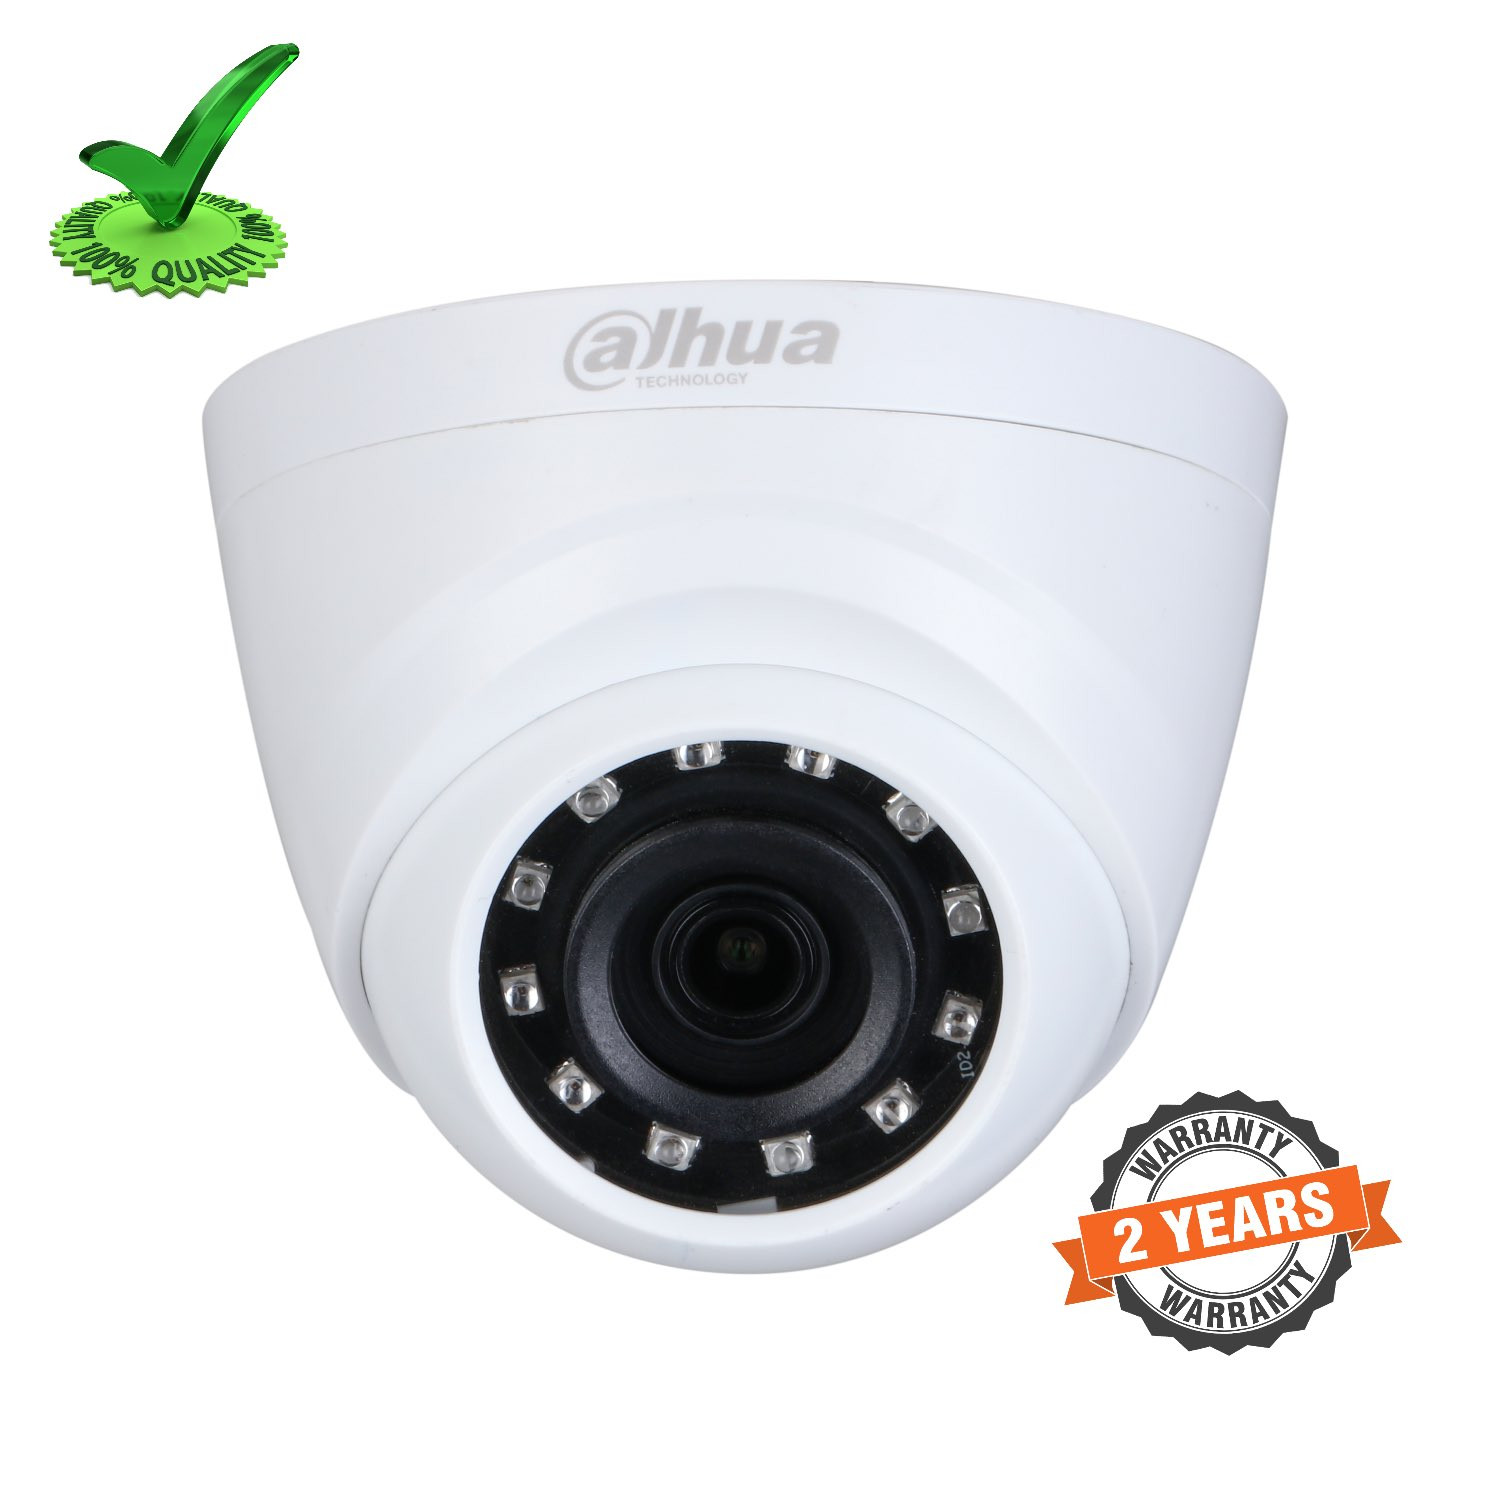 Dahua DH-HAC-HDW1400RP 4MP HDCVI IR Eyeball Camera